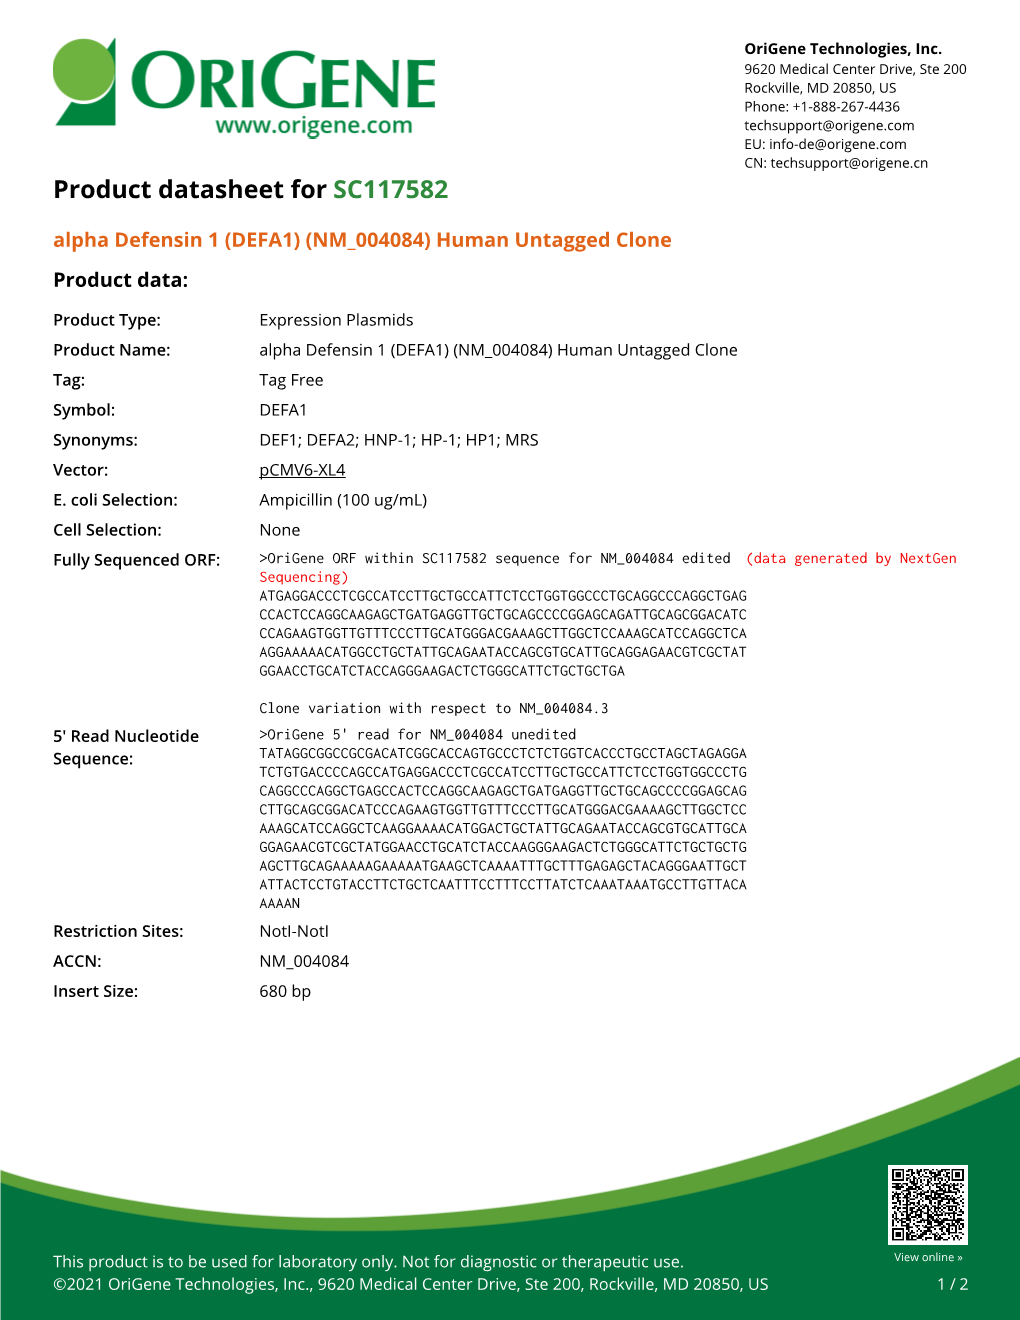 Alpha Defensin 1 (DEFA1) (NM 004084) Human Untagged Clone Product Data